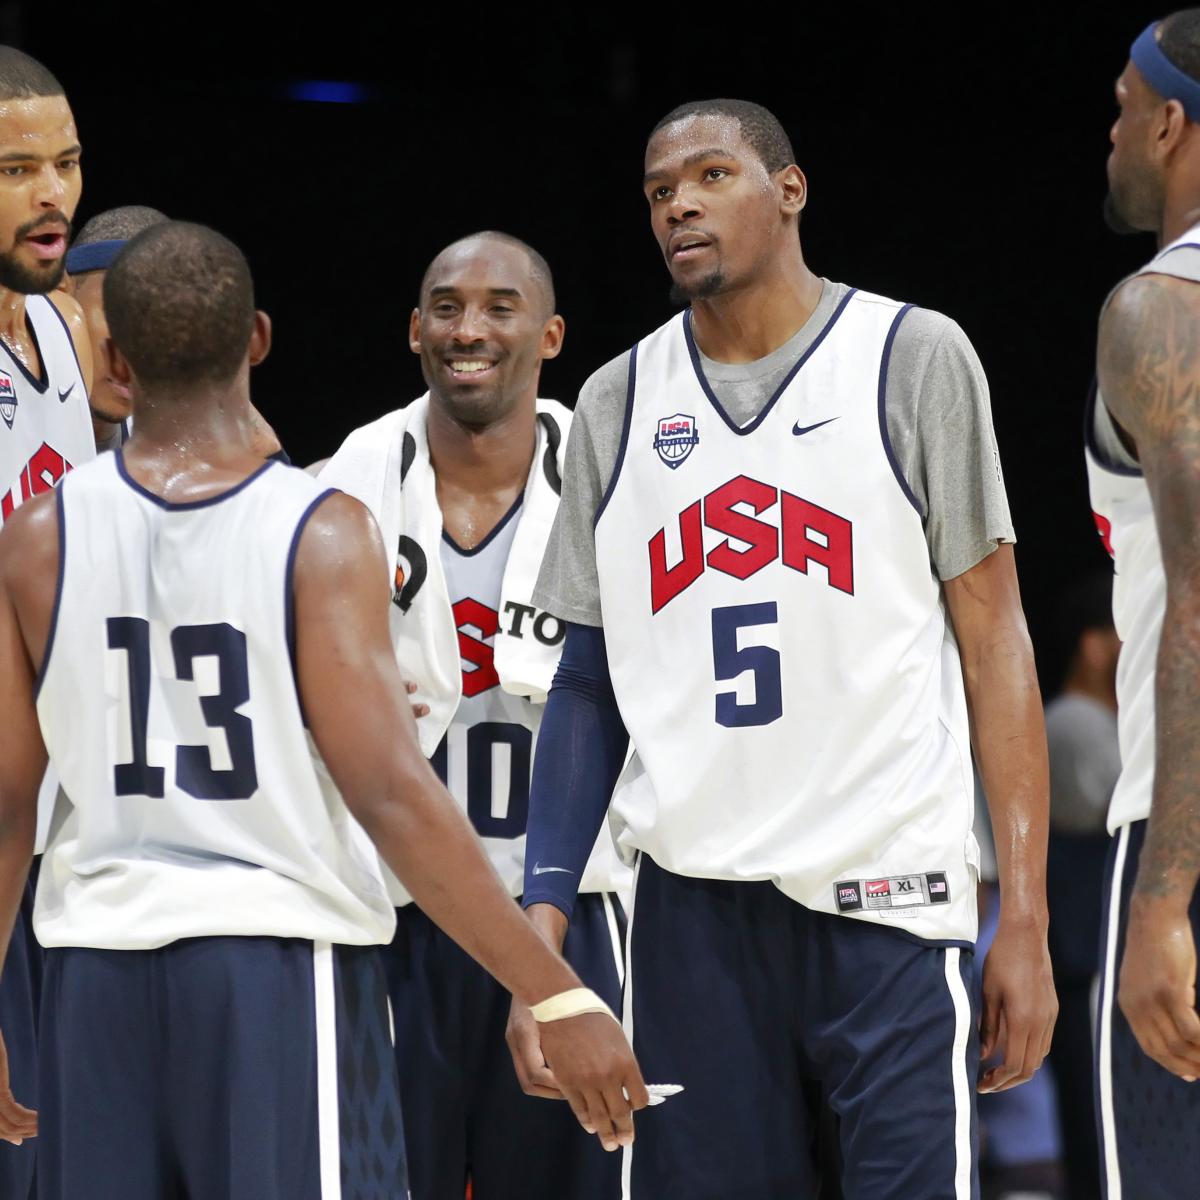 Olympics 2012 Schedule: USA Men's Basketball's Road to Gold | Bleacher